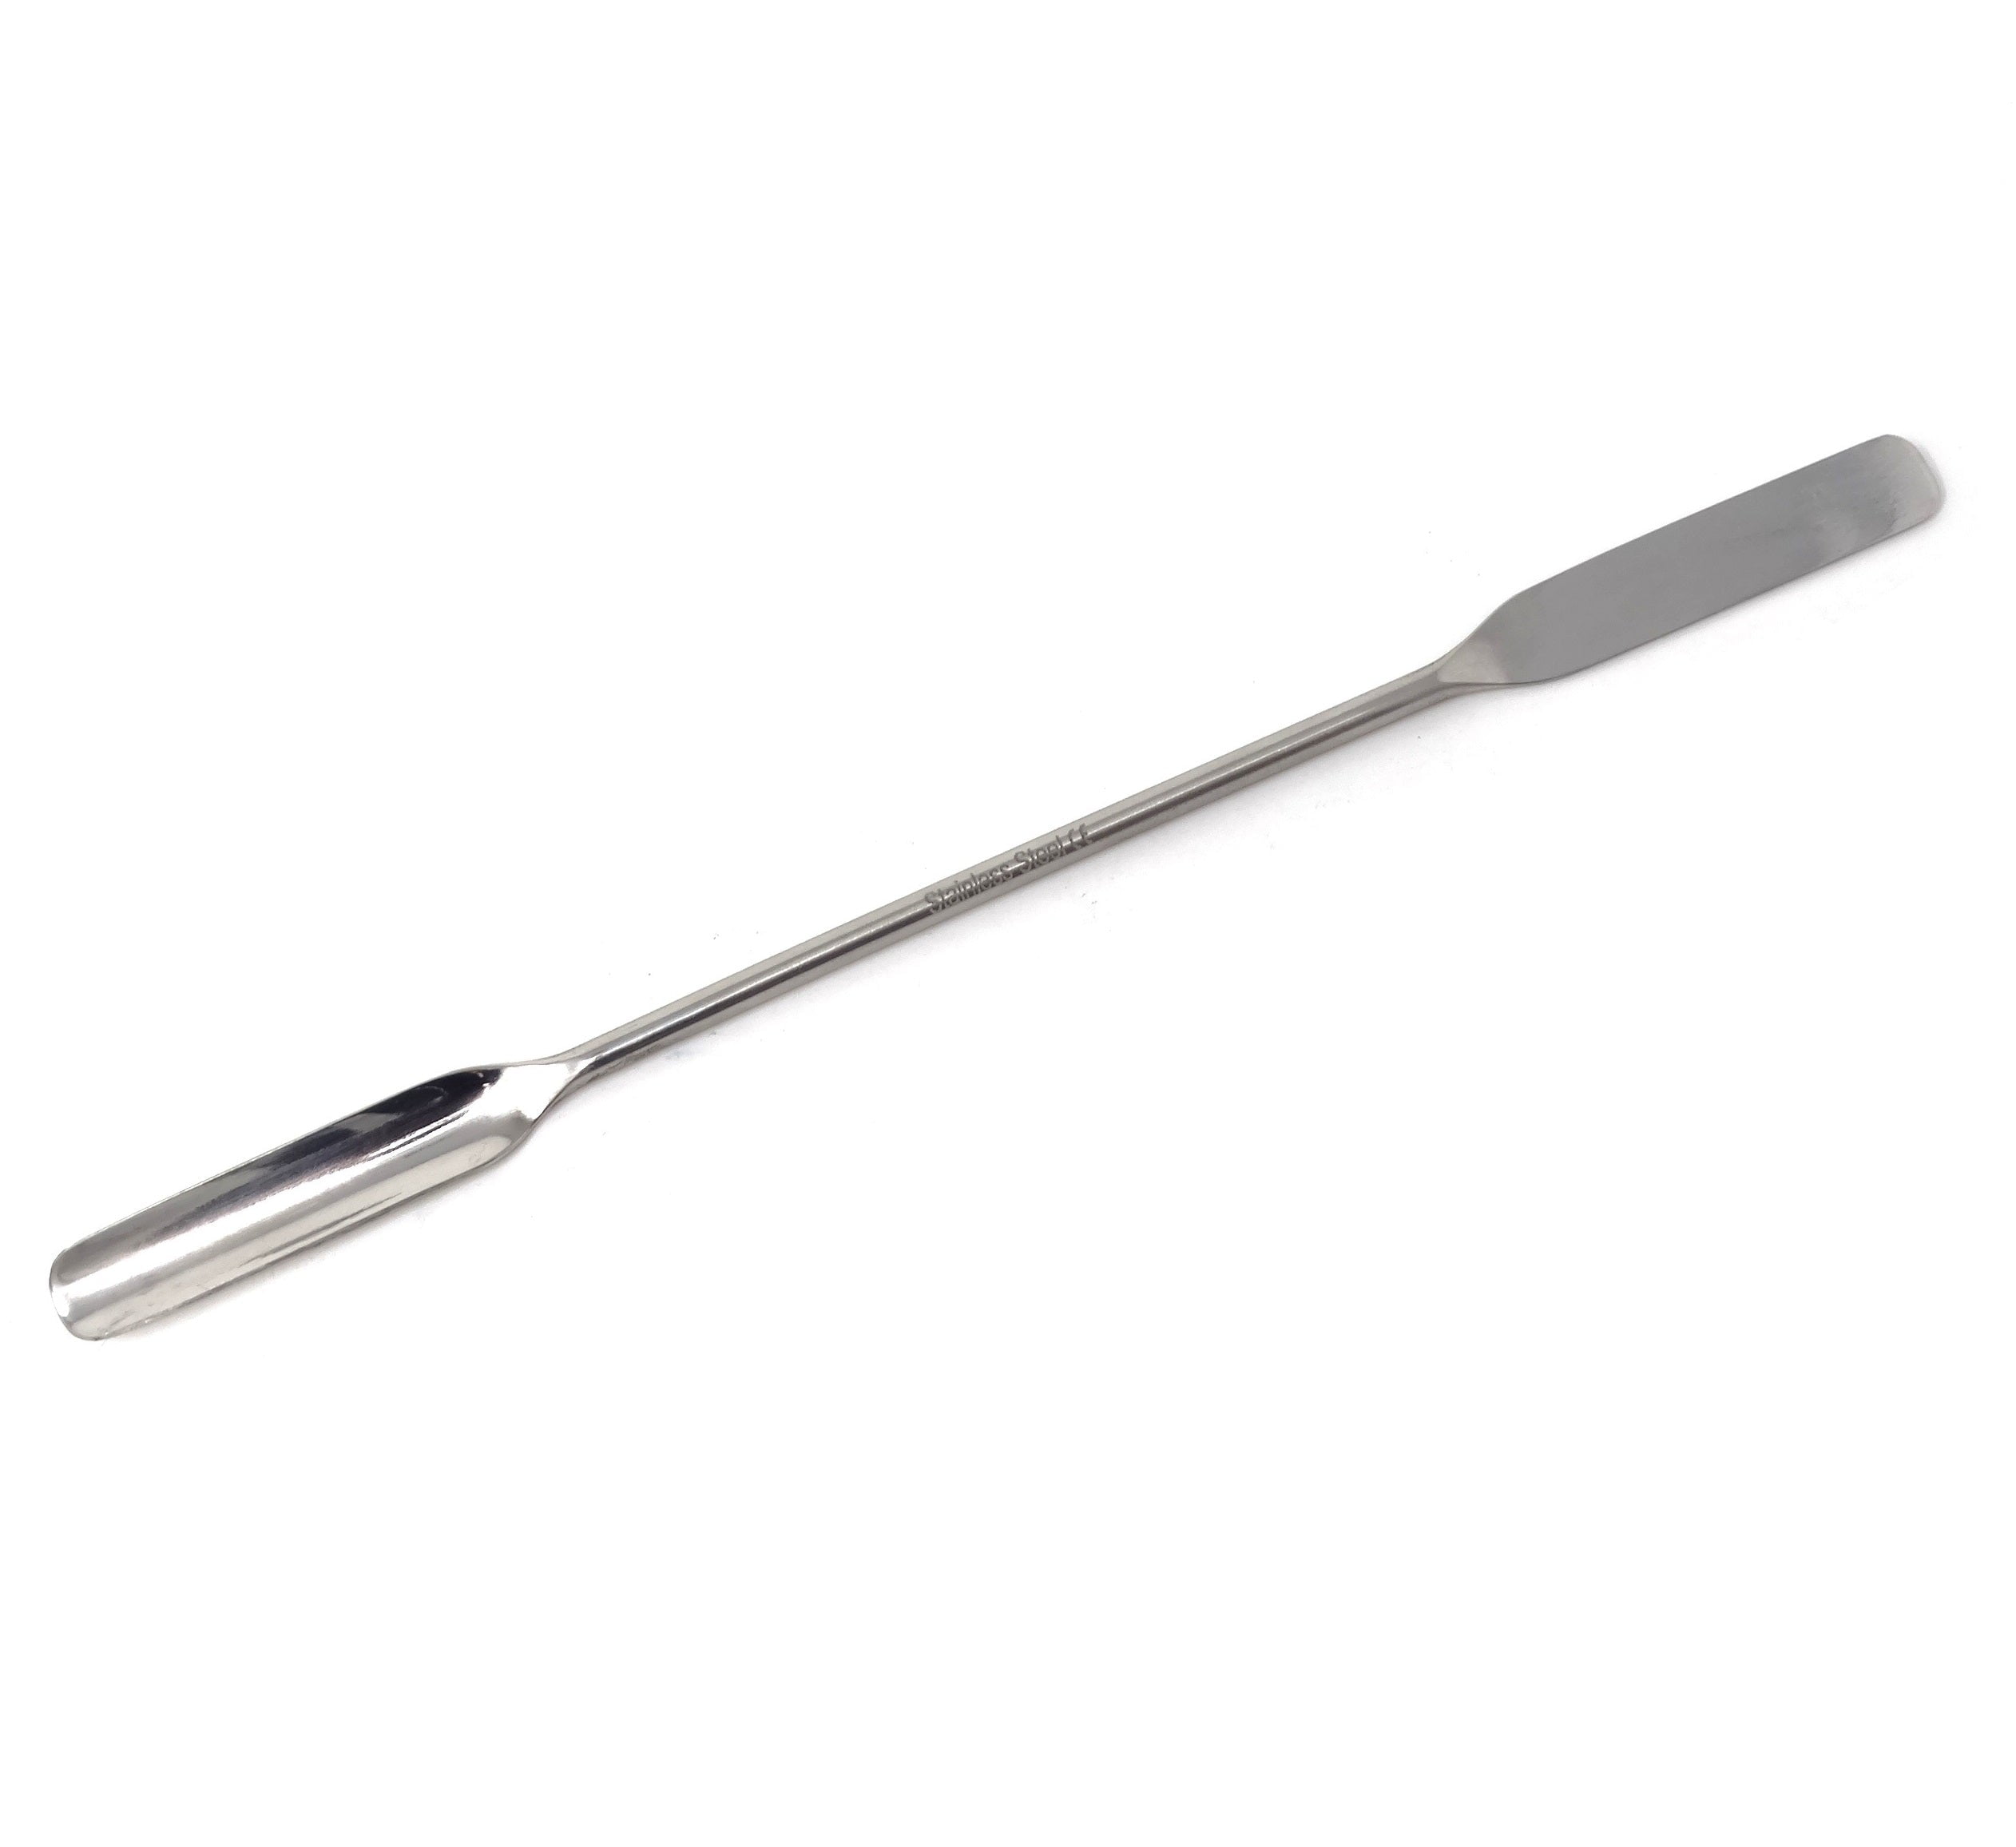 Stainless Steel Micro Lab Spoon/Scoop Spatula Blade Sampler, with Vinyl  Handle 6.25